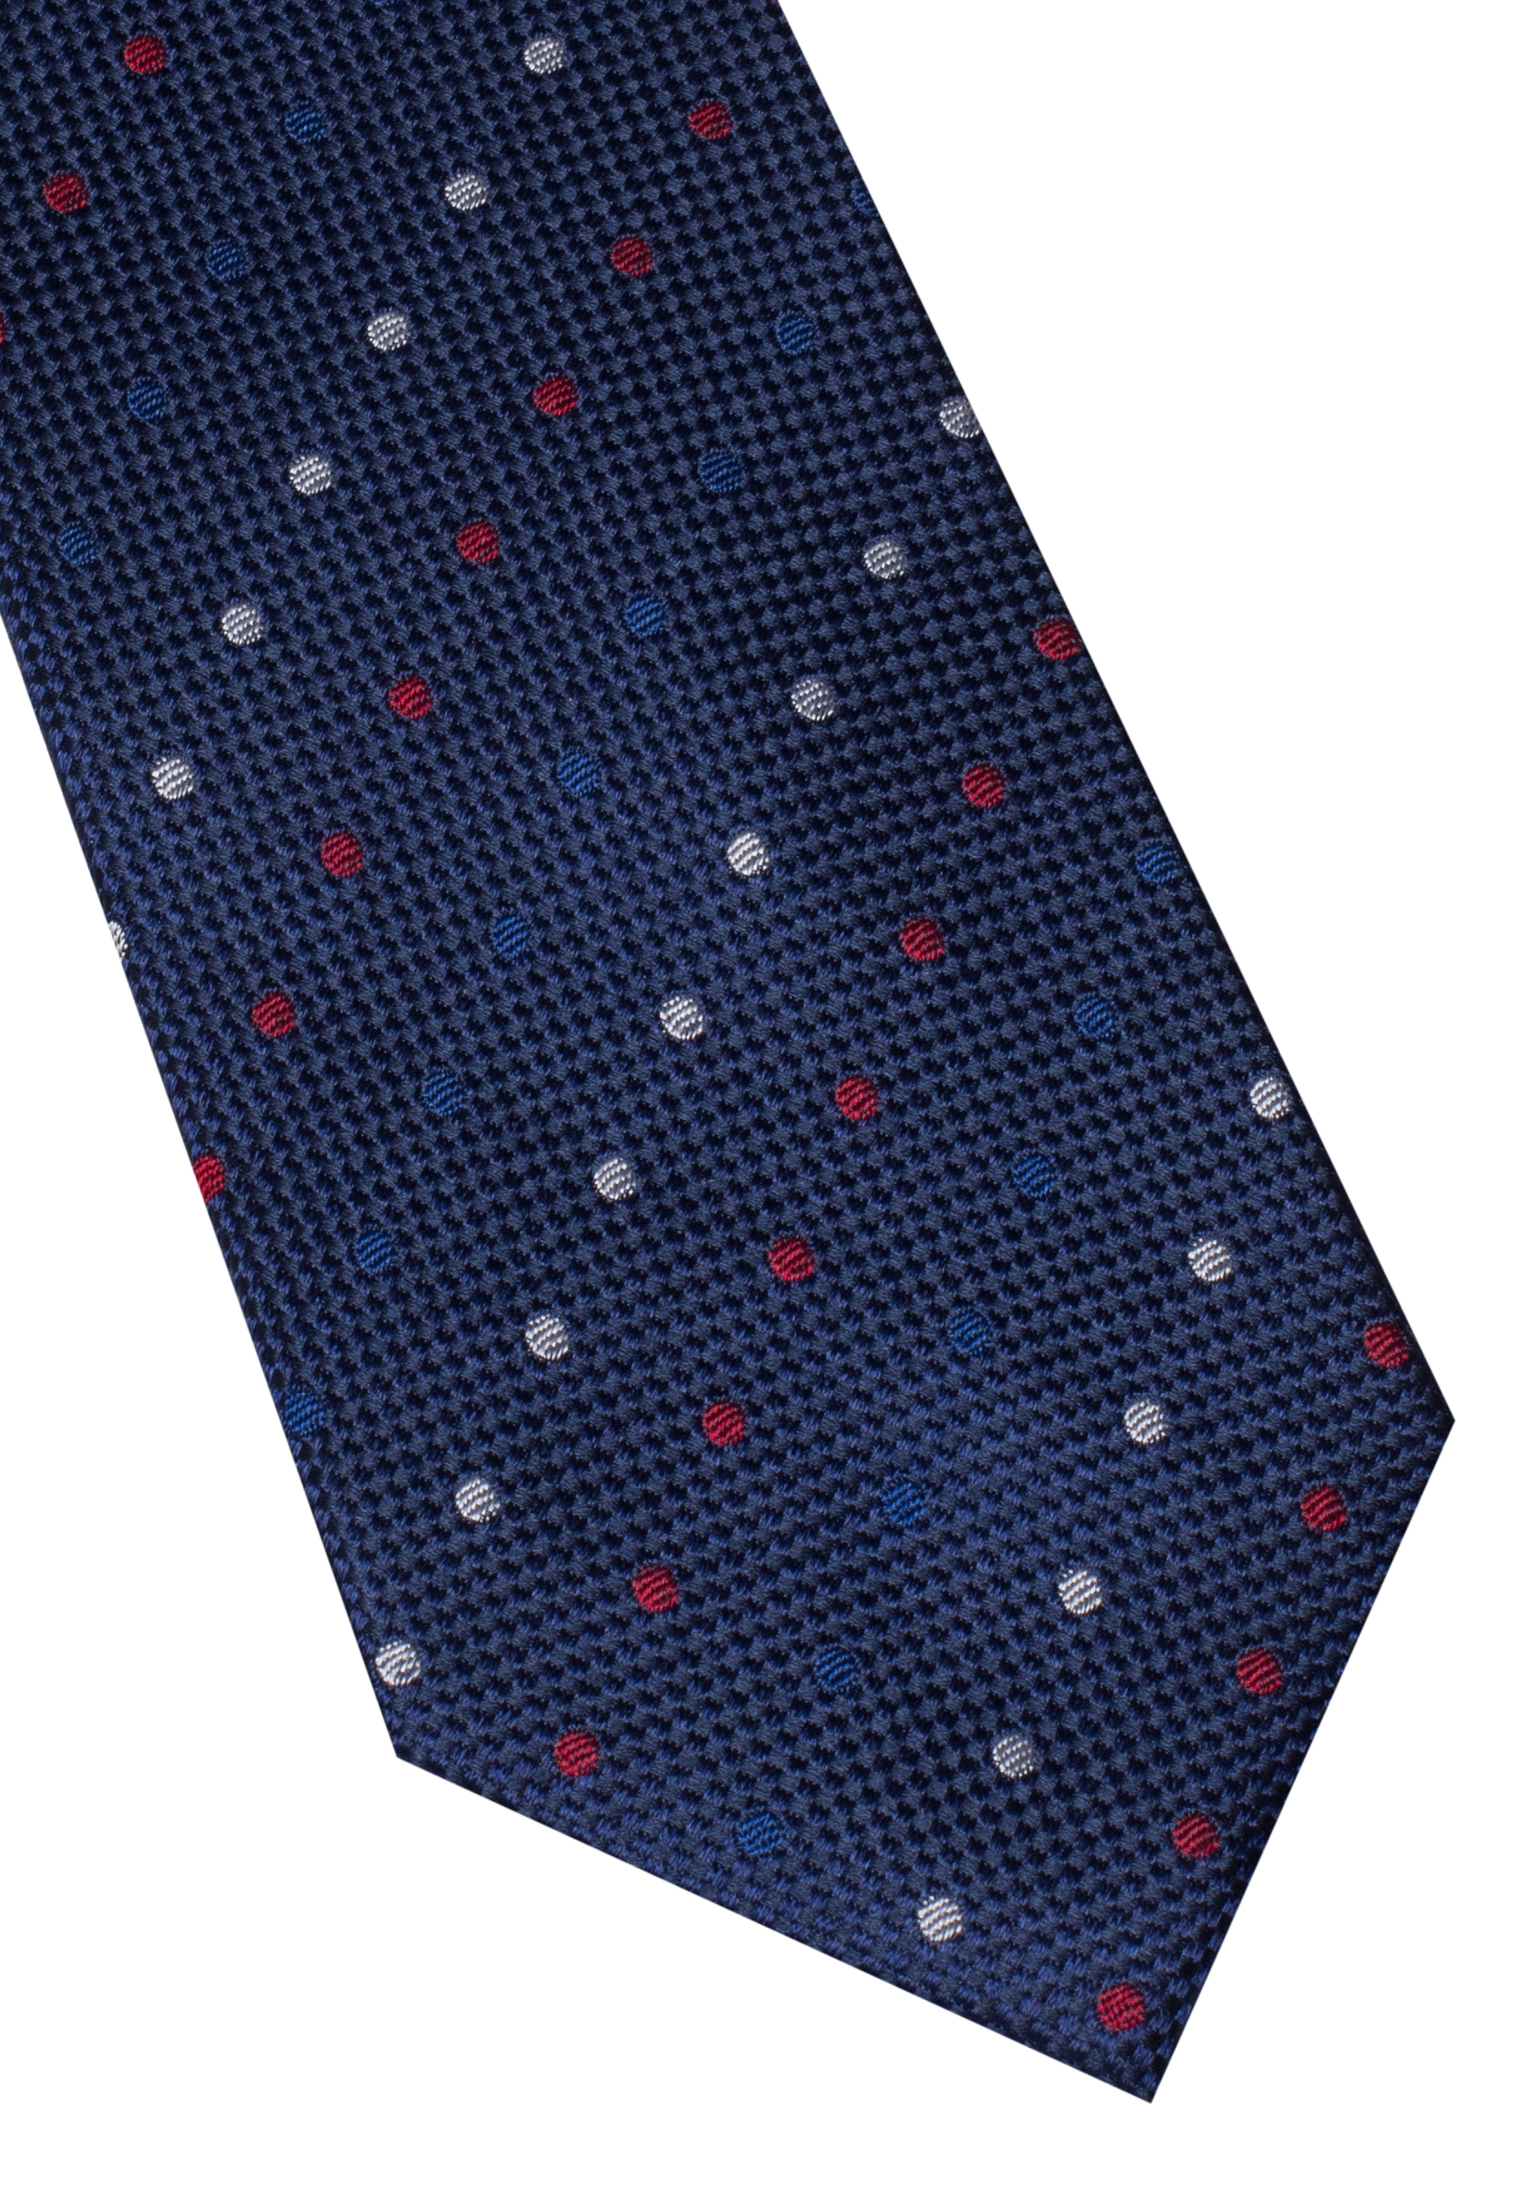 Krawatte in rot getupft | rot | 142 | 1AC00168-05-01-142 | Breite Krawatten